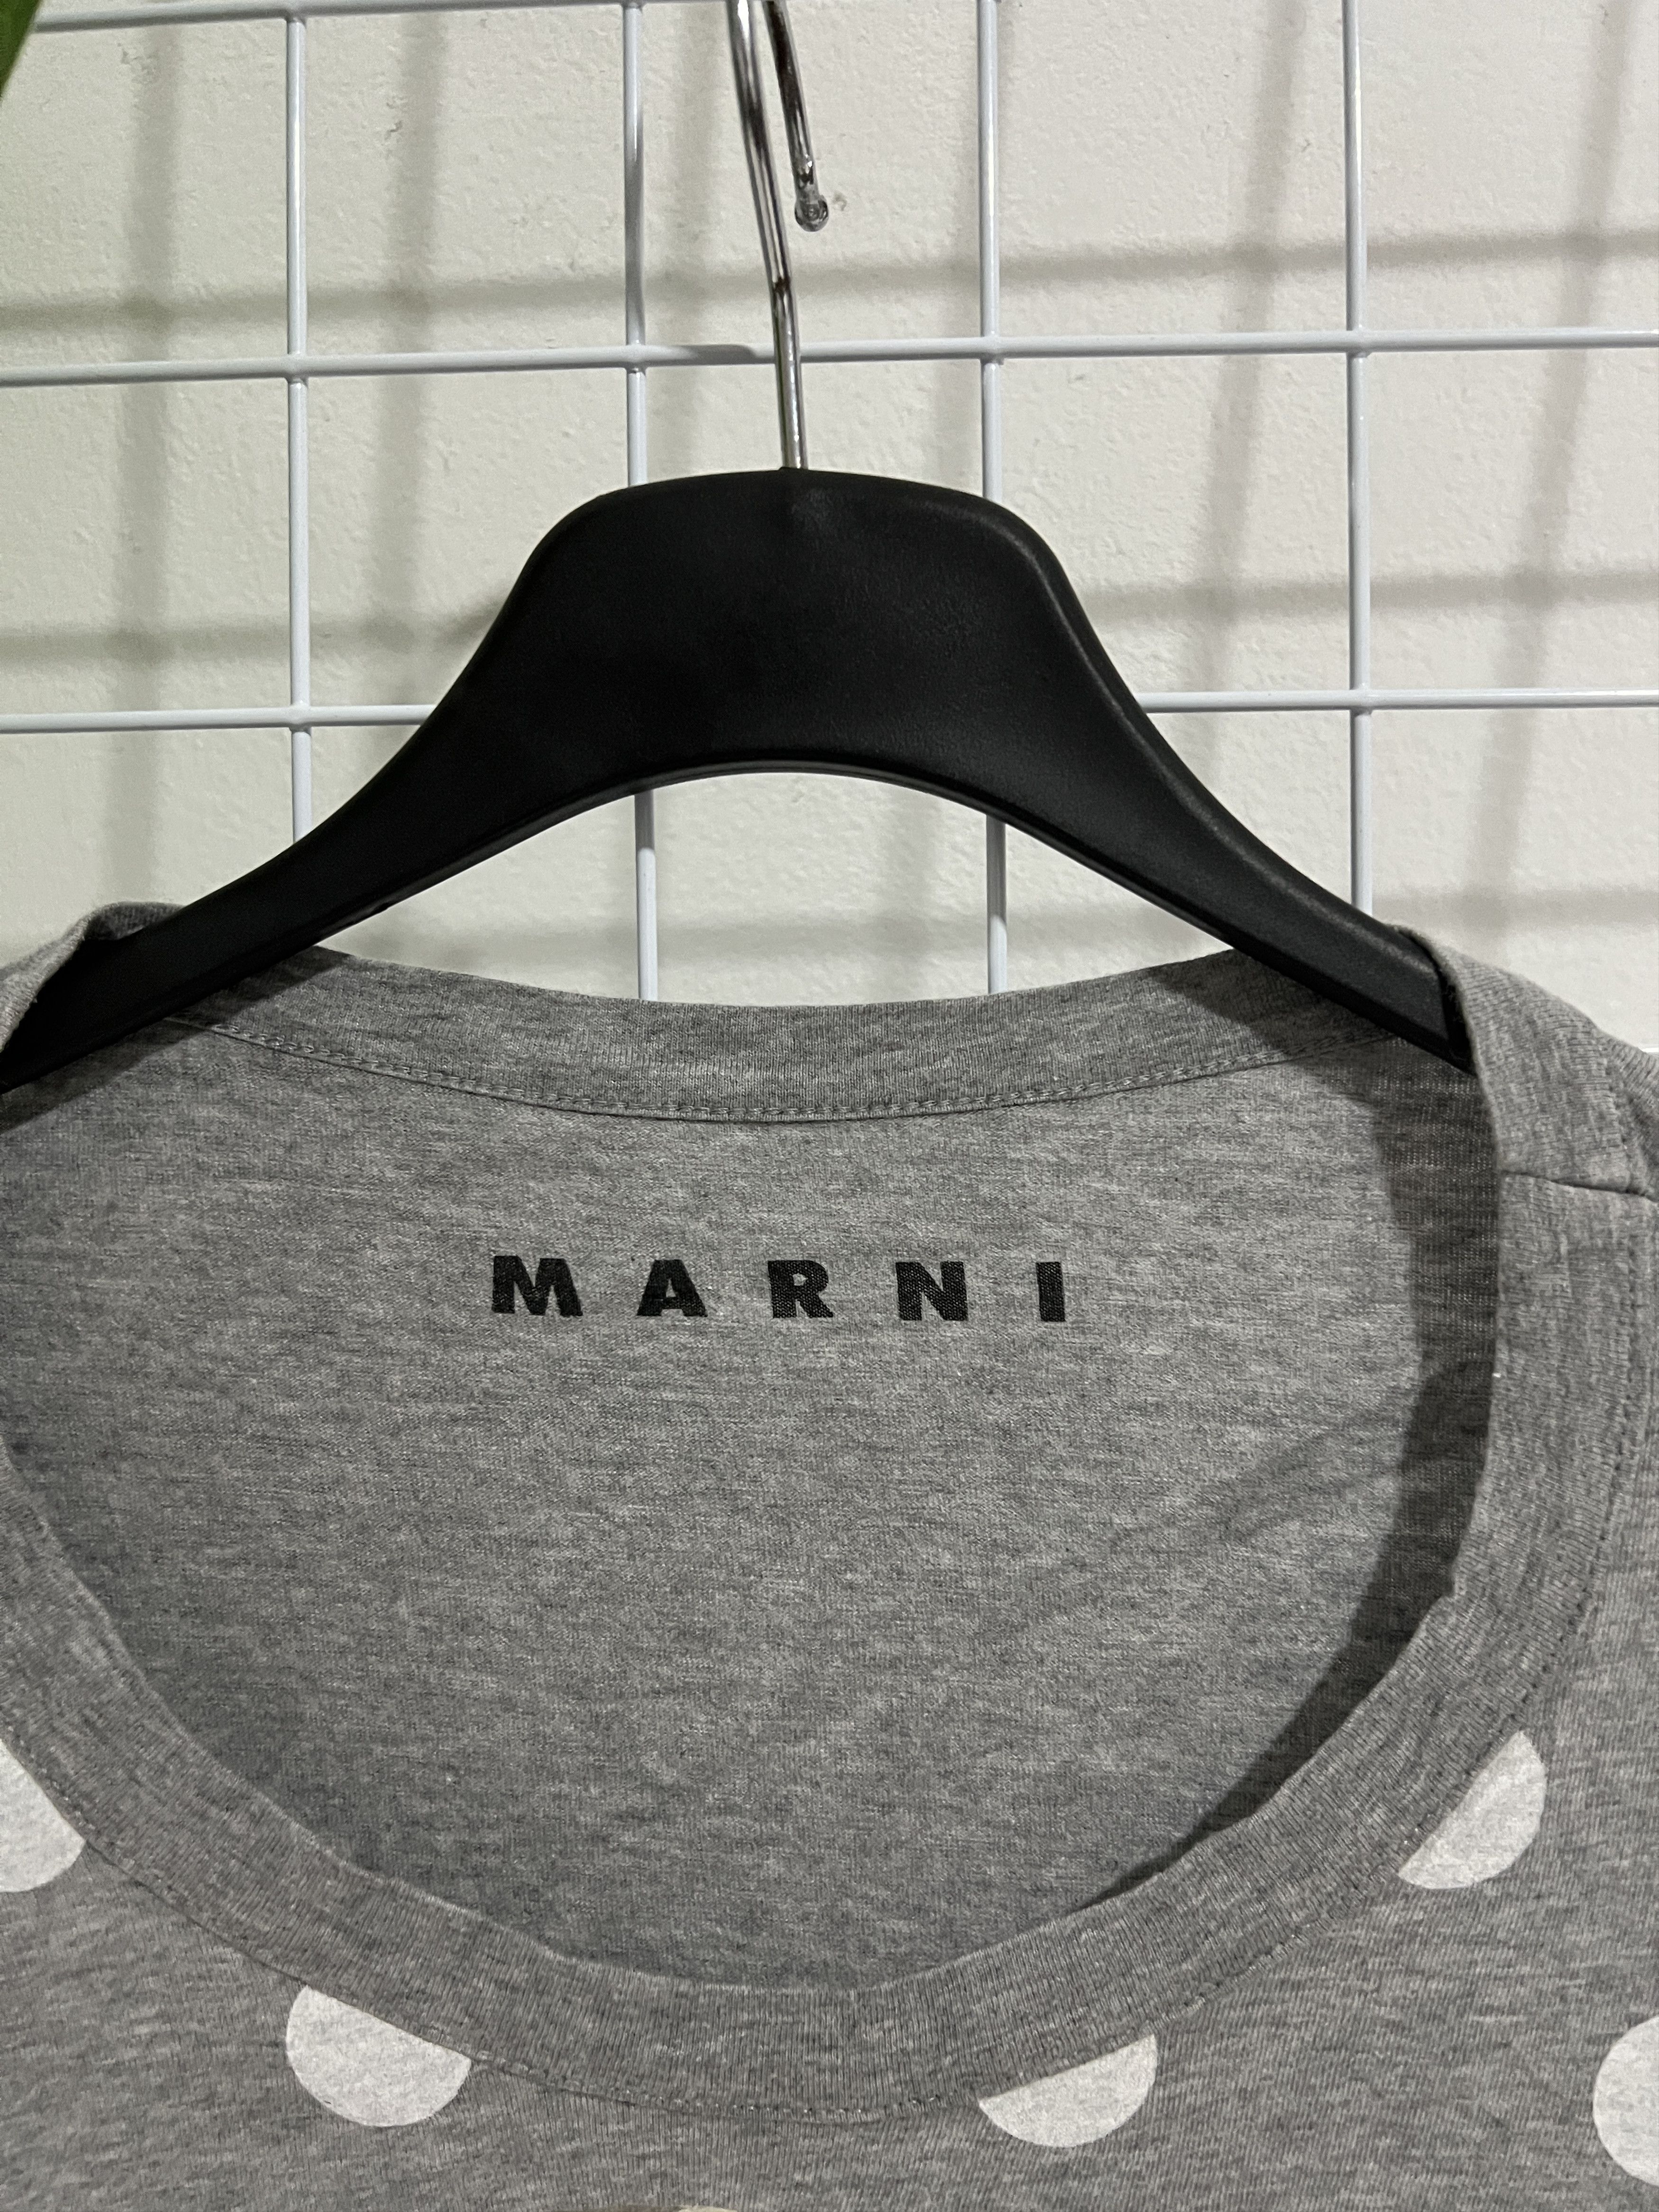 Marni Marni Girl Women Polka Dot Size XS / US 0-2 / IT 36-38 - 3 Thumbnail